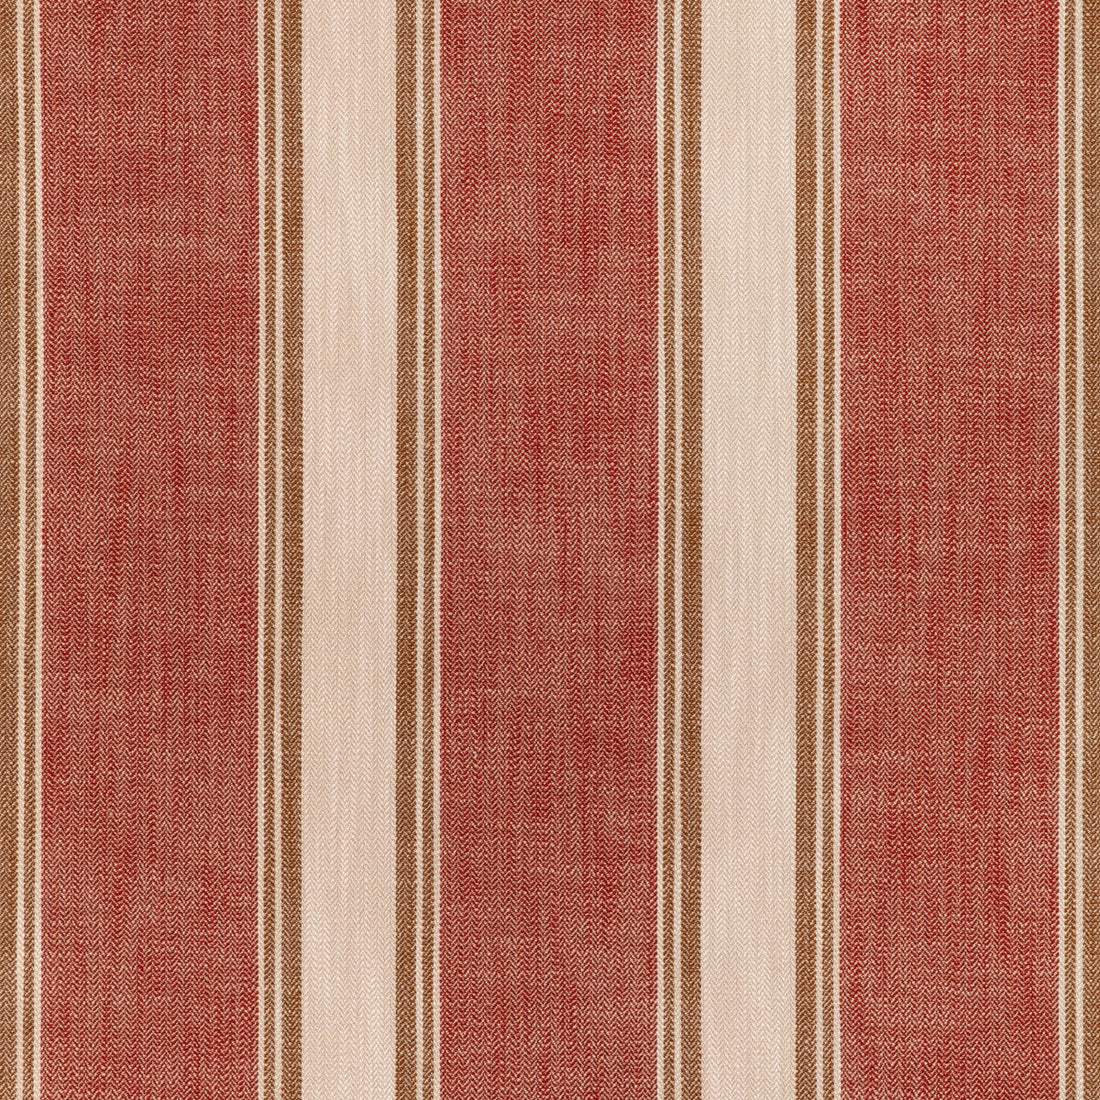 La Riviera Stripe fabric in spice color - pattern 8024120.924.0 - by Brunschwig &amp; Fils in the Les Ensembliers L&